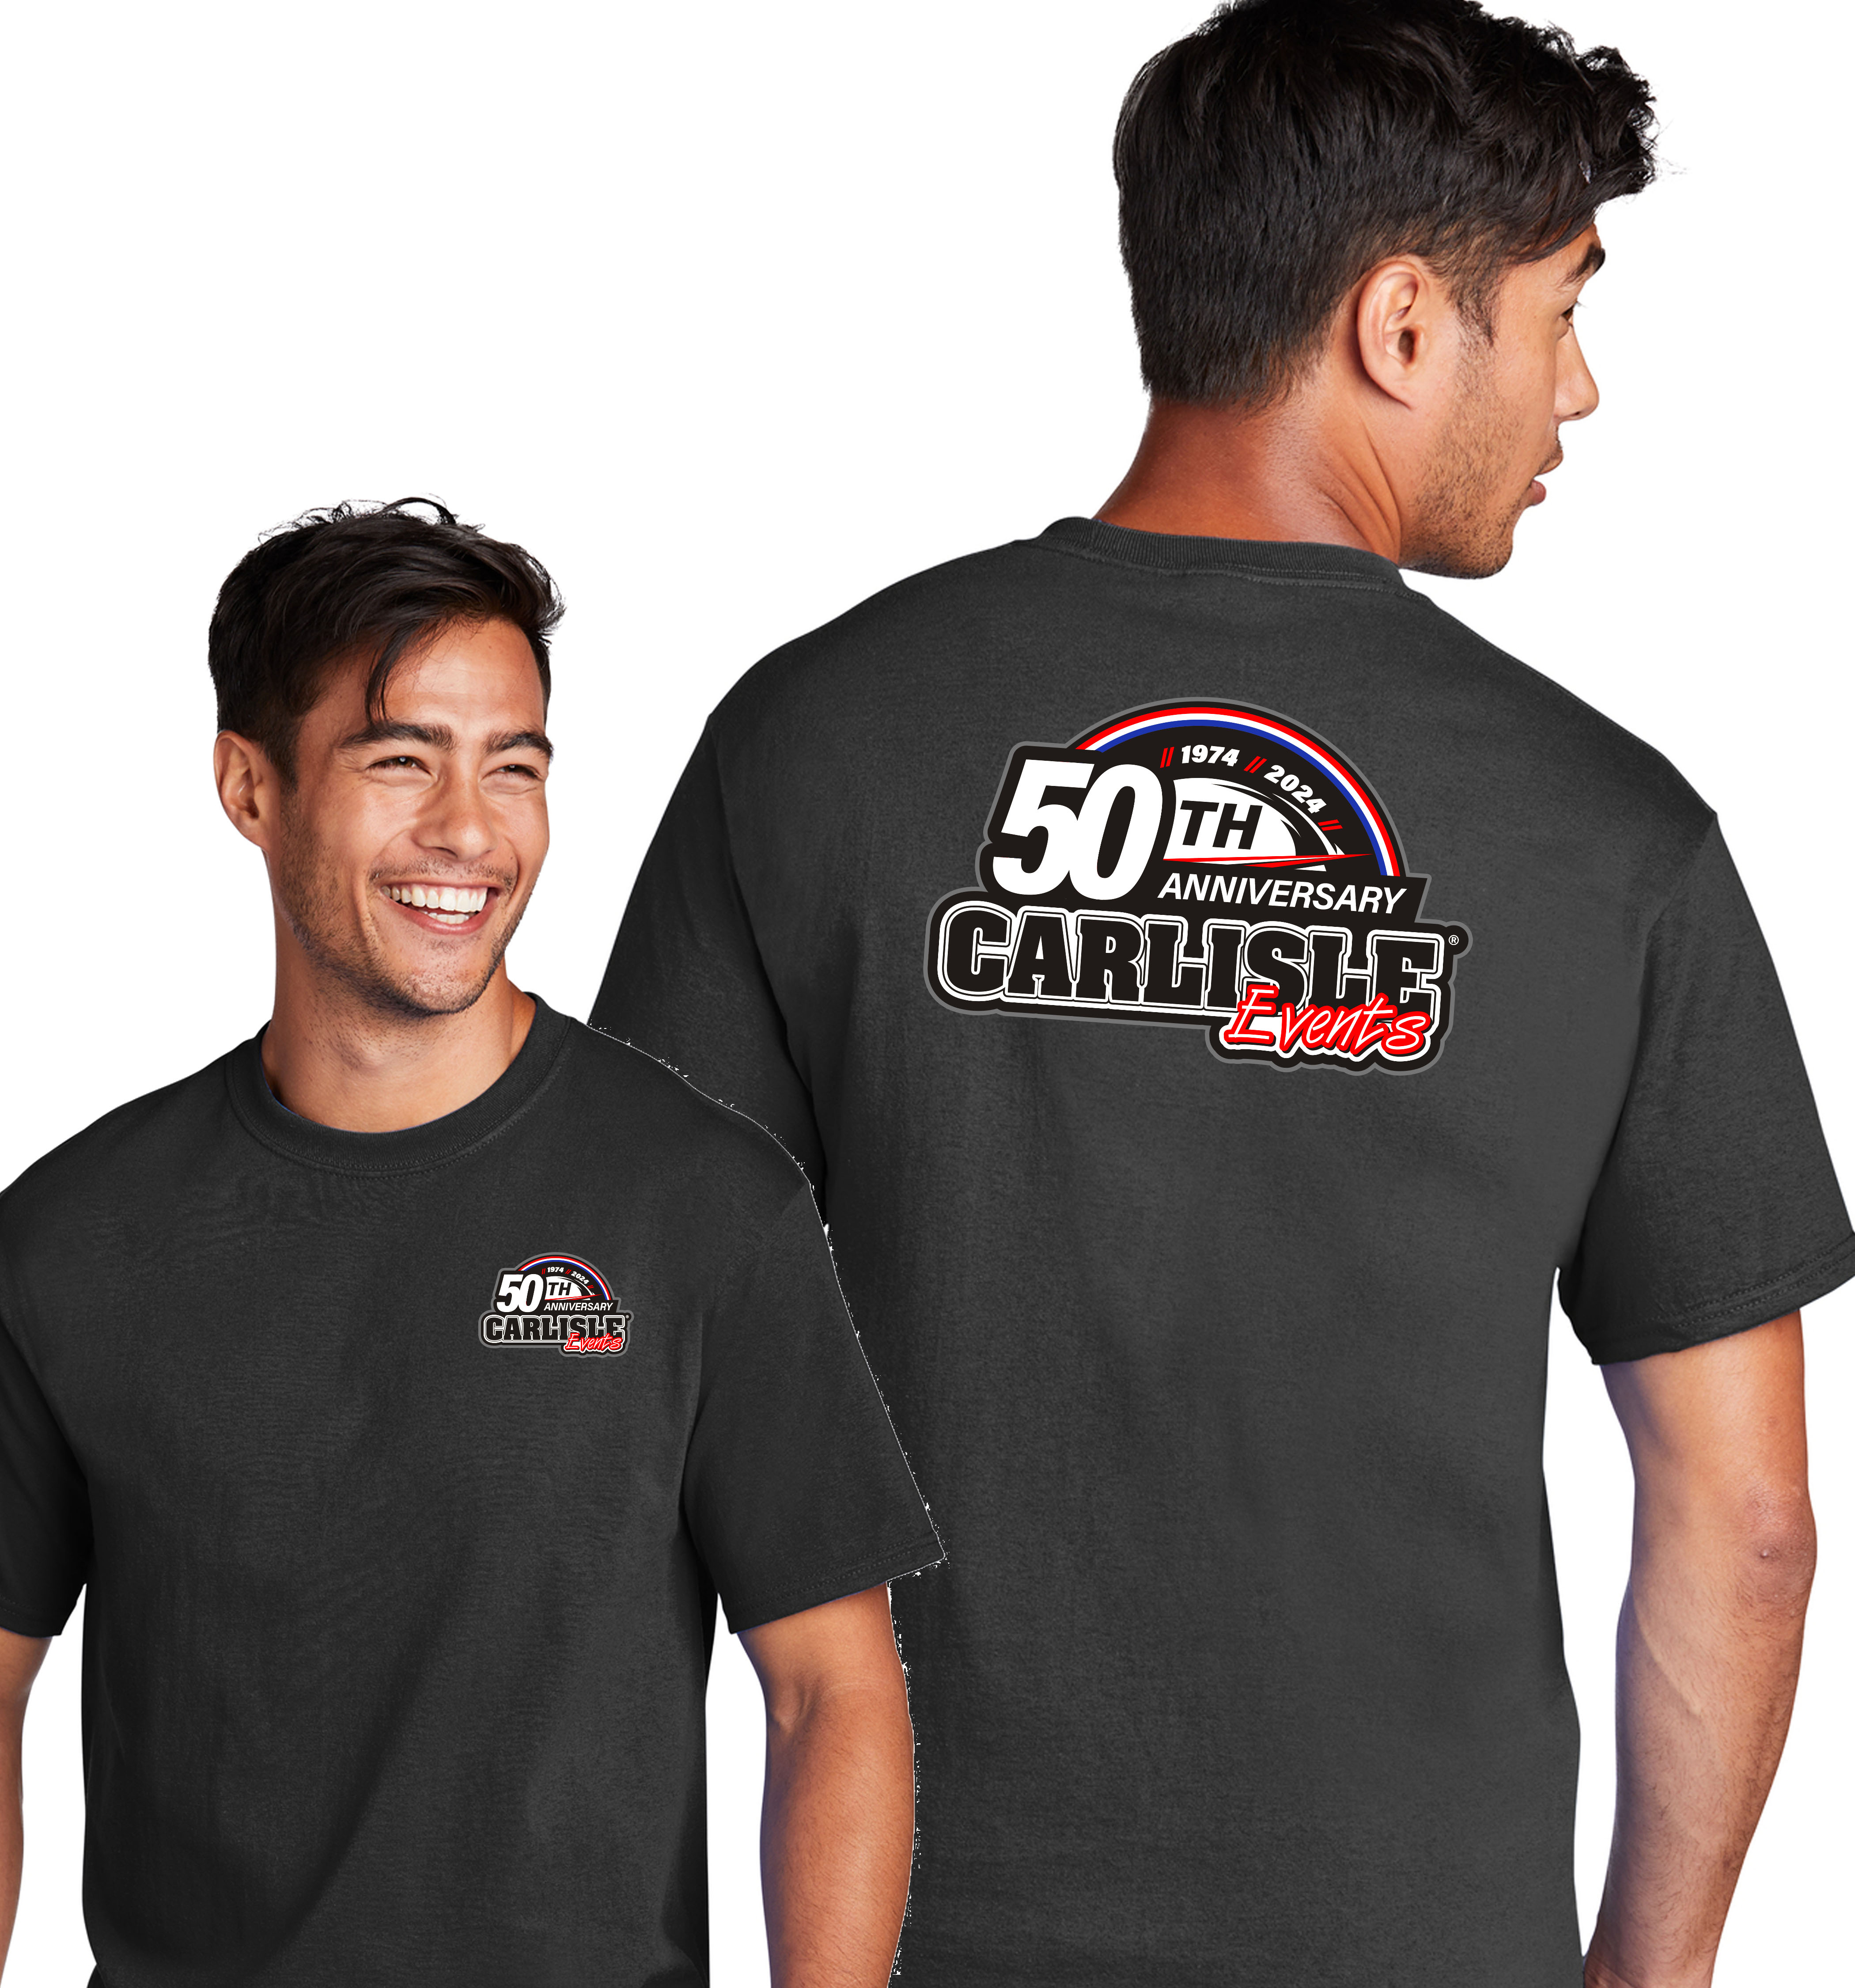 Carlisle 50th T shirt mockup